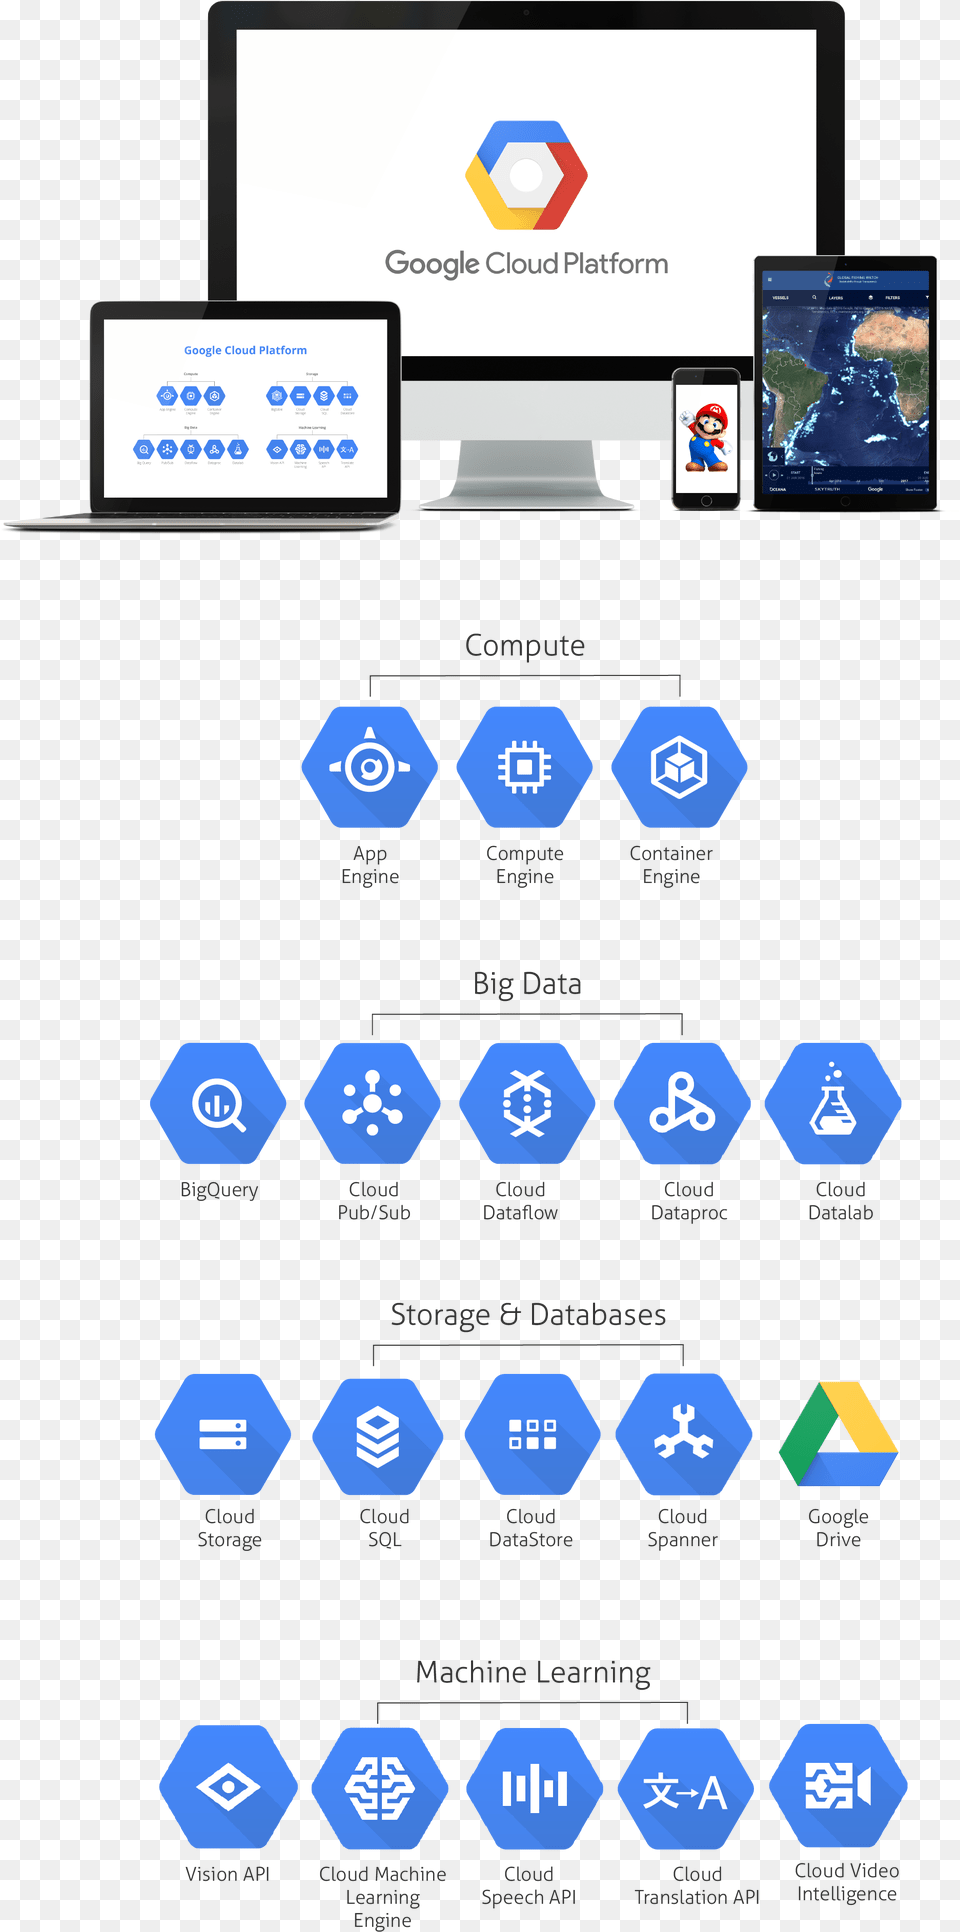 Google Cloud Platform Google, Computer Hardware, Electronics, Hardware, Monitor Png Image